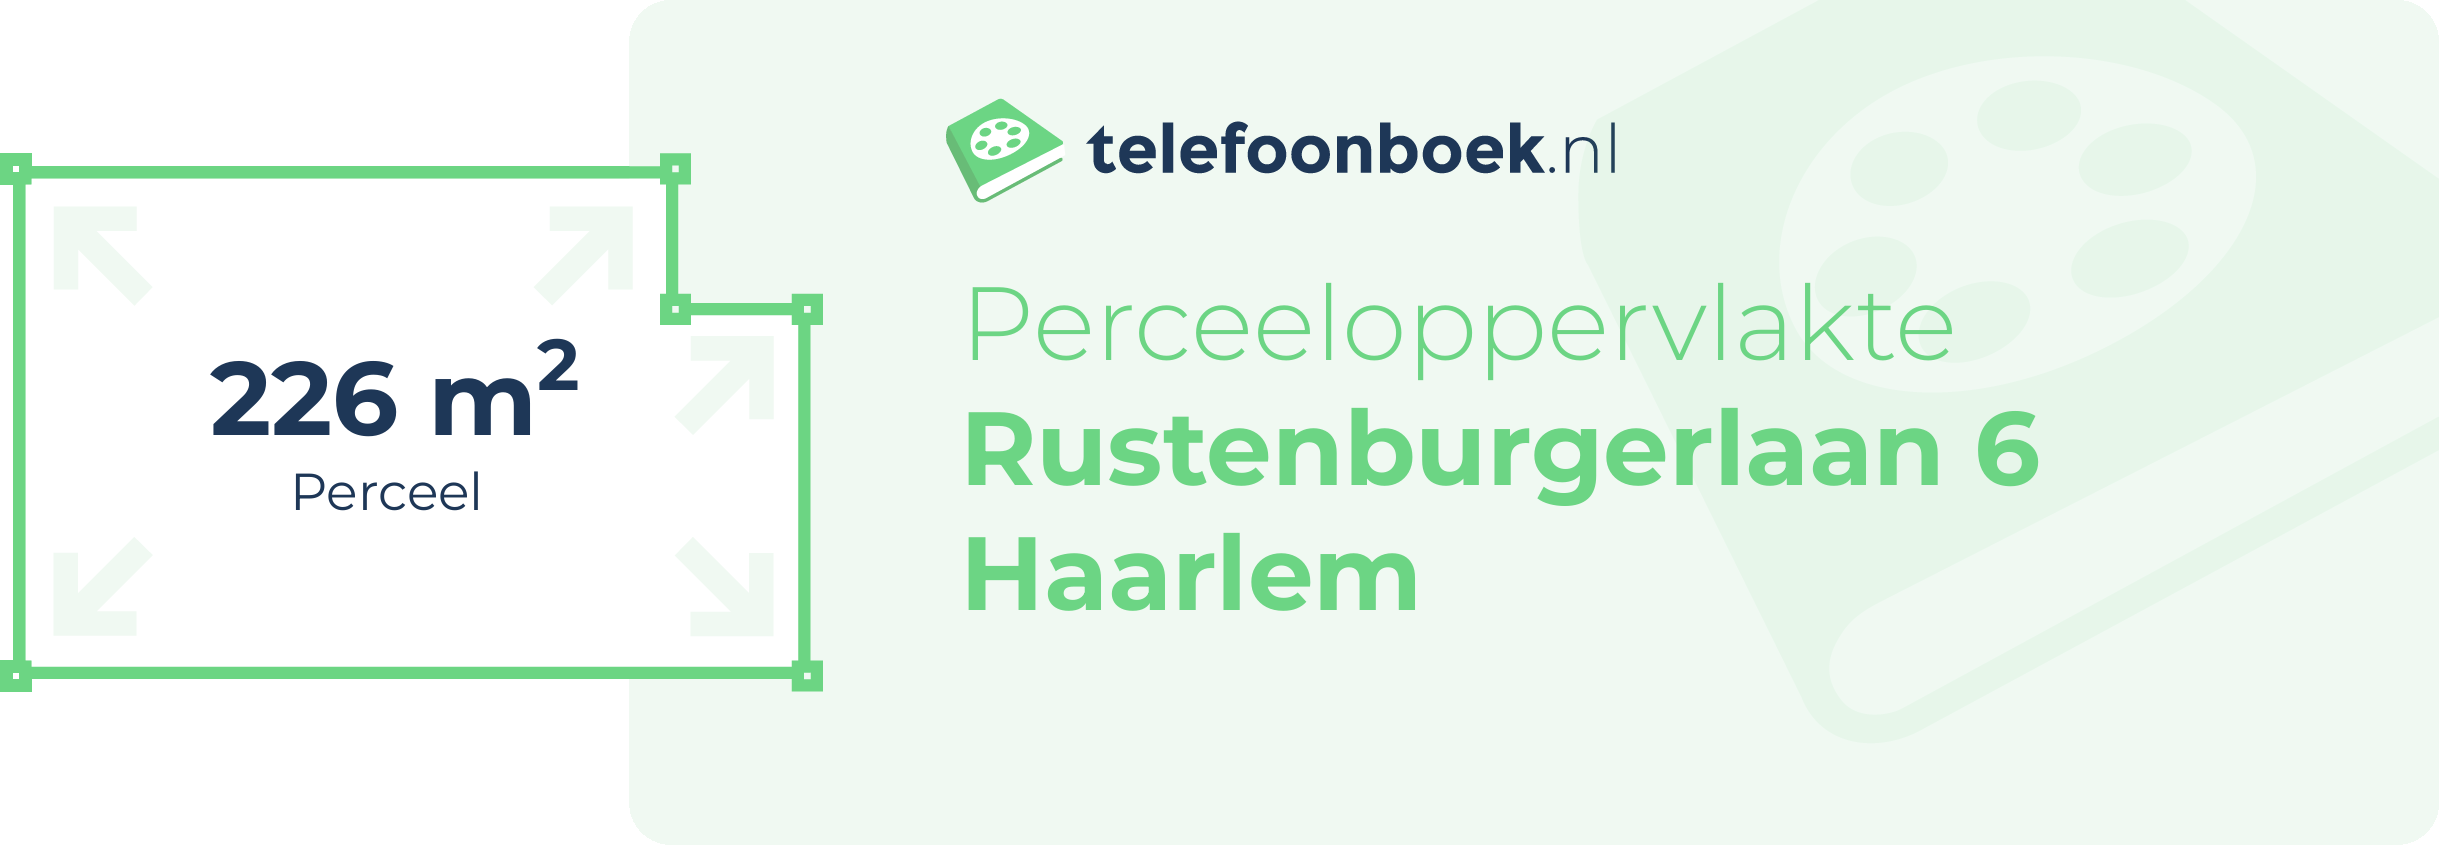 Perceeloppervlakte Rustenburgerlaan 6 Haarlem